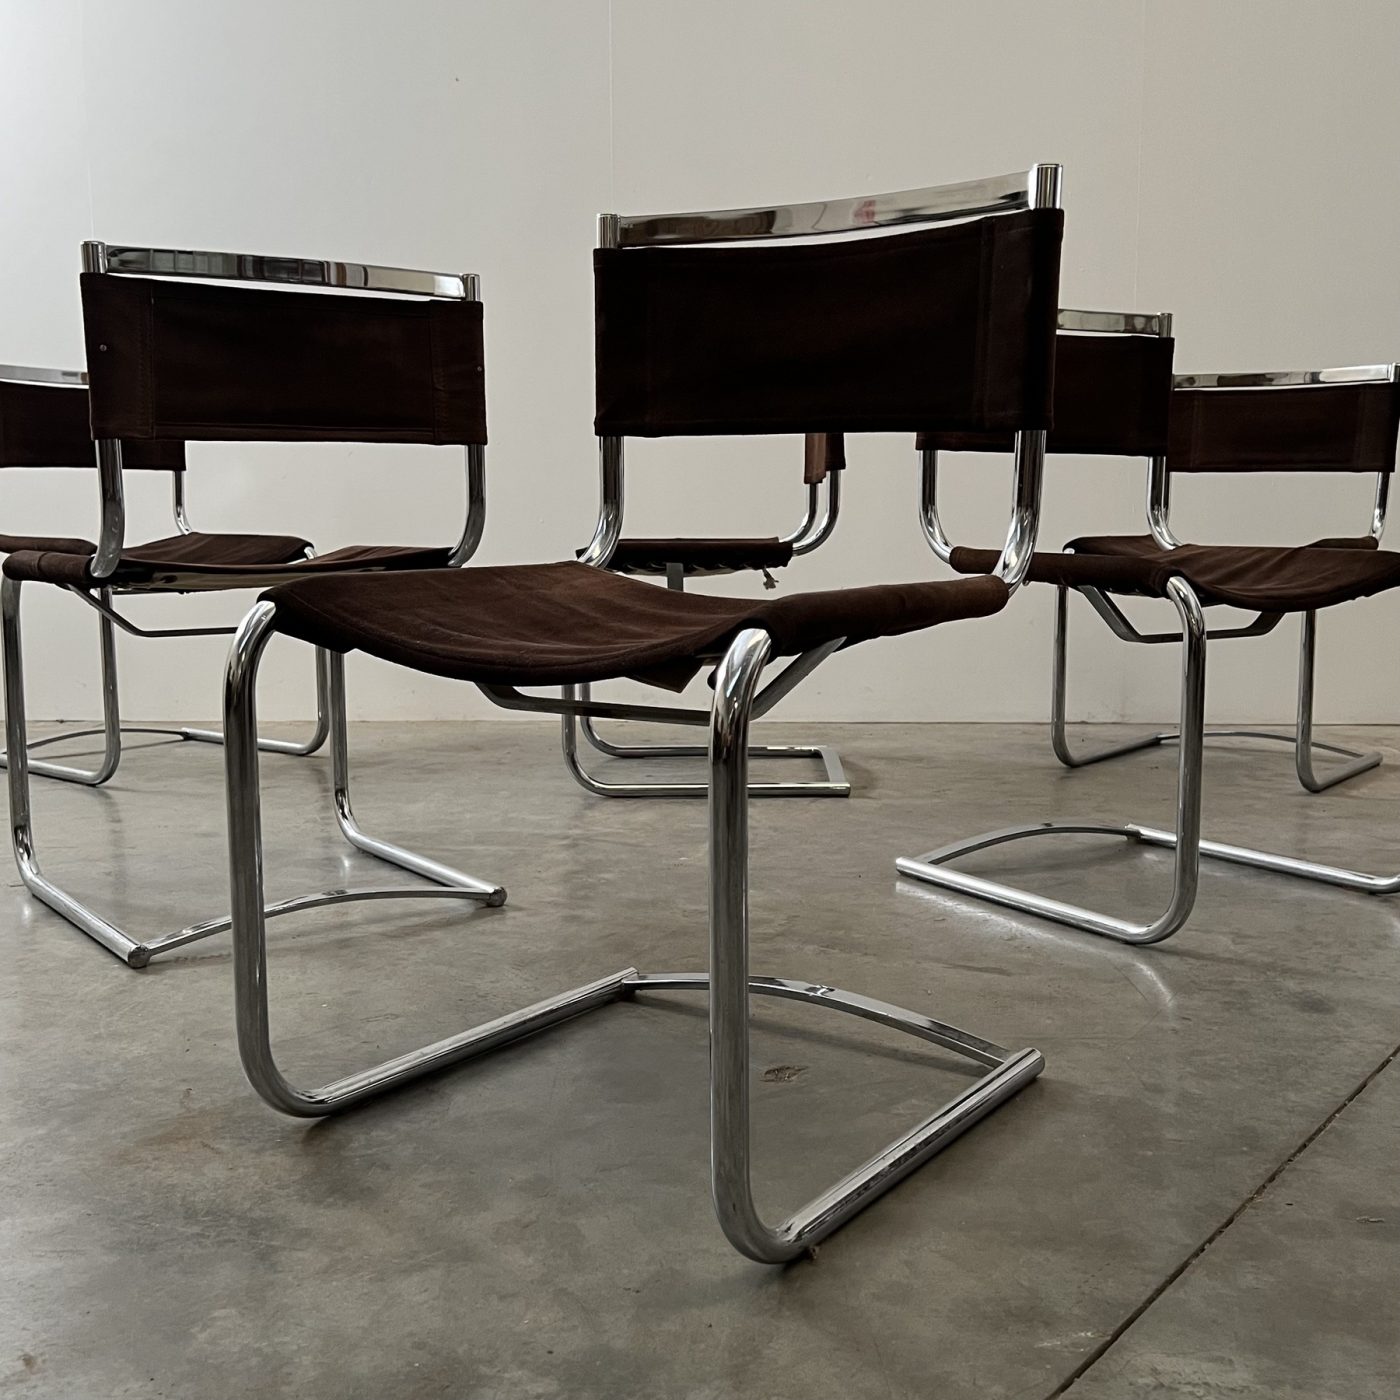 objet-vagabond-vintage-chairs0005